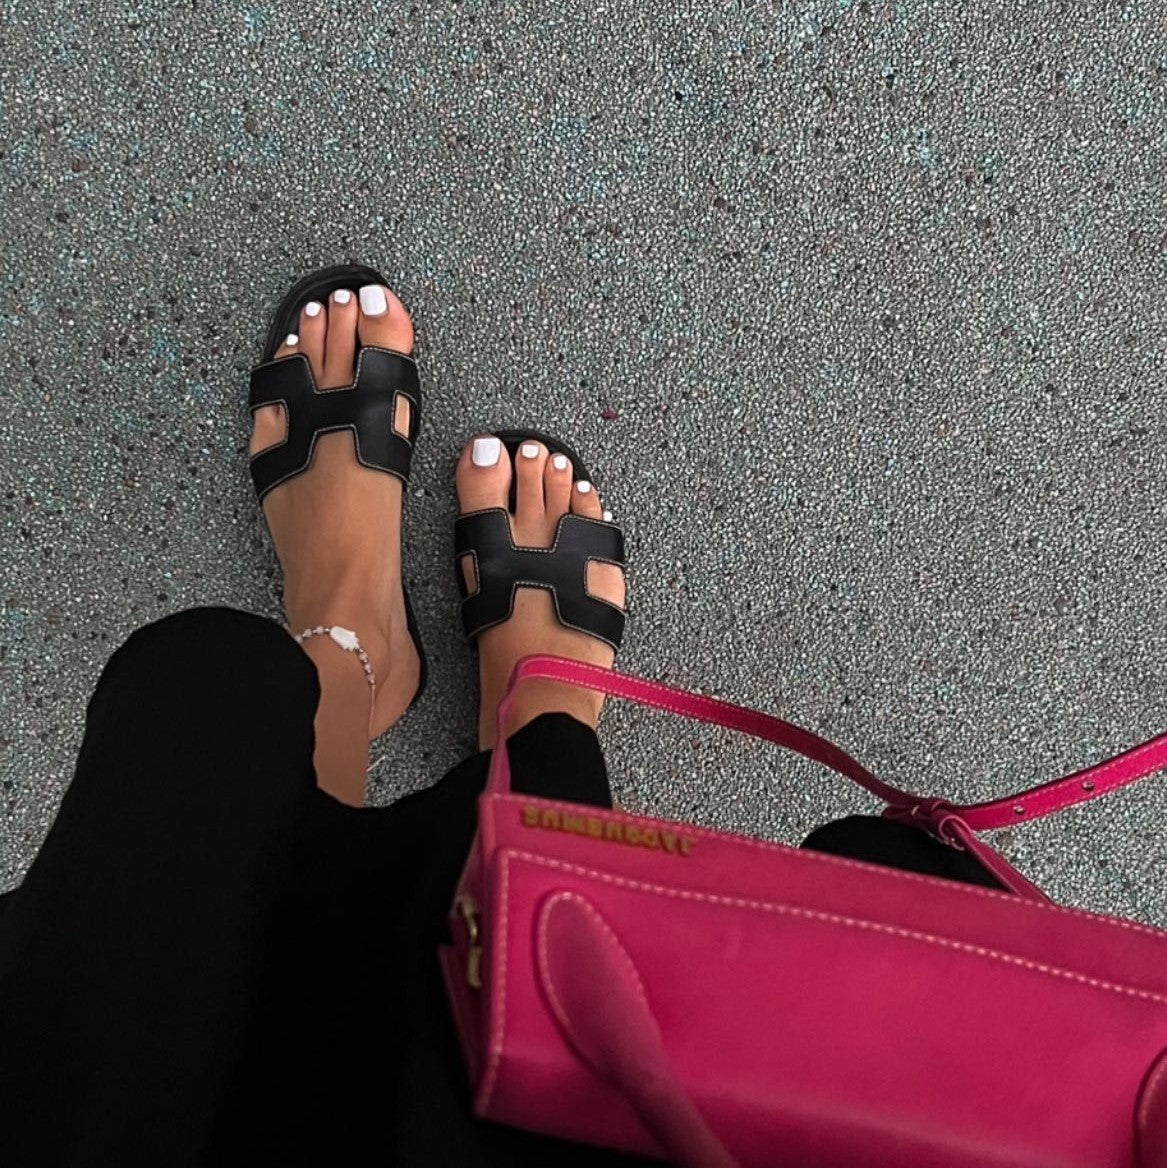 Casual Summer Slide Slippers